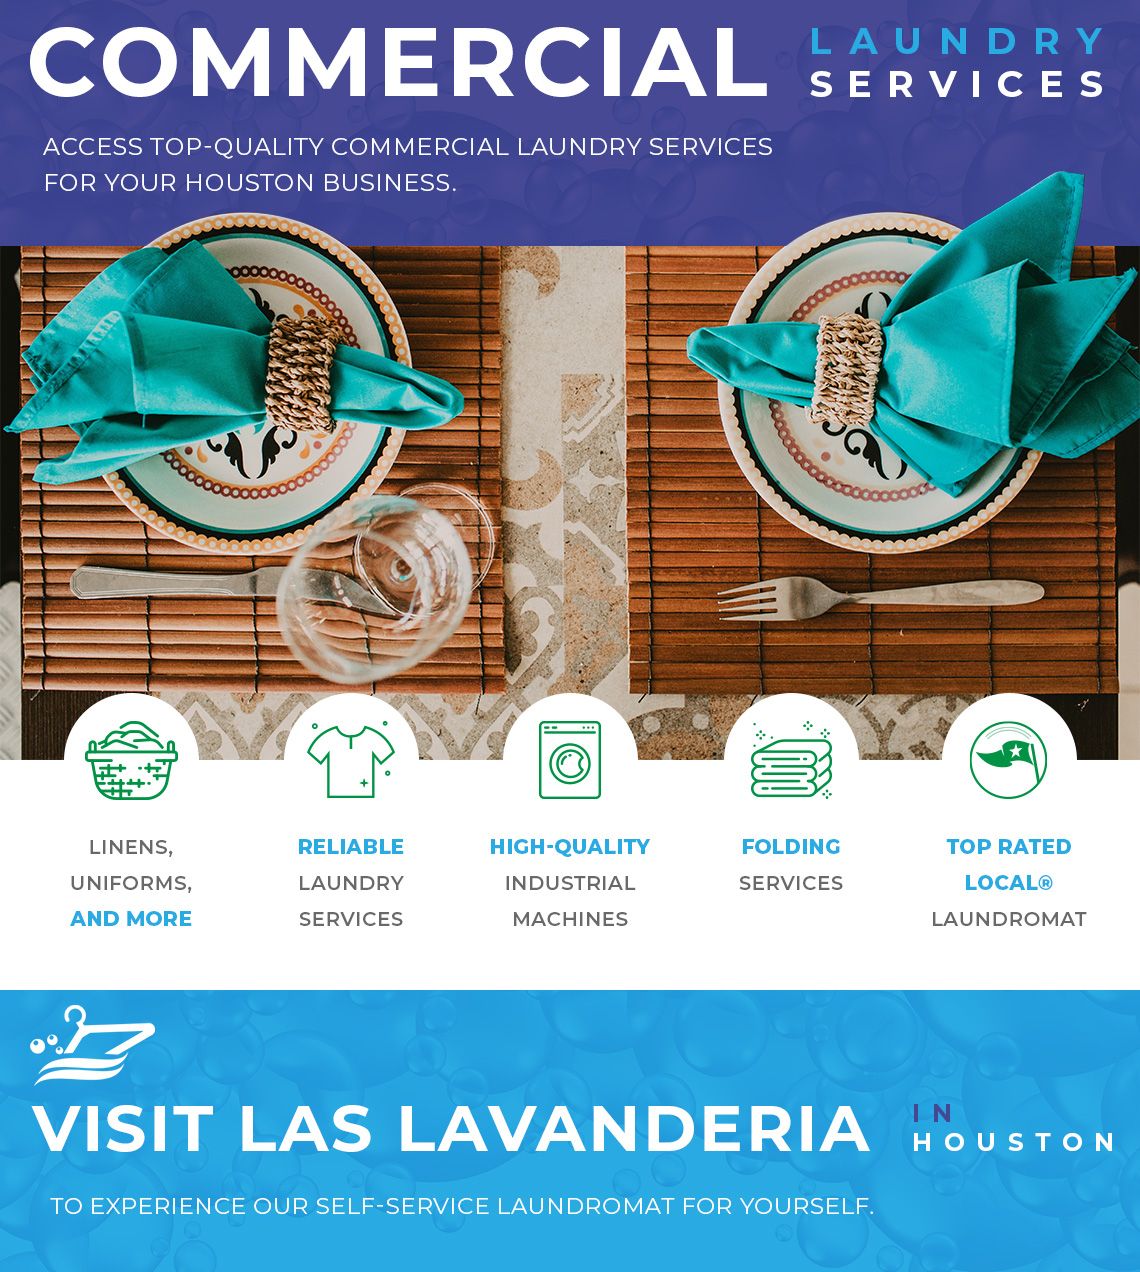 LasLavanderia-CommercialLaundryServices-infographic-6011e65330576.jpg